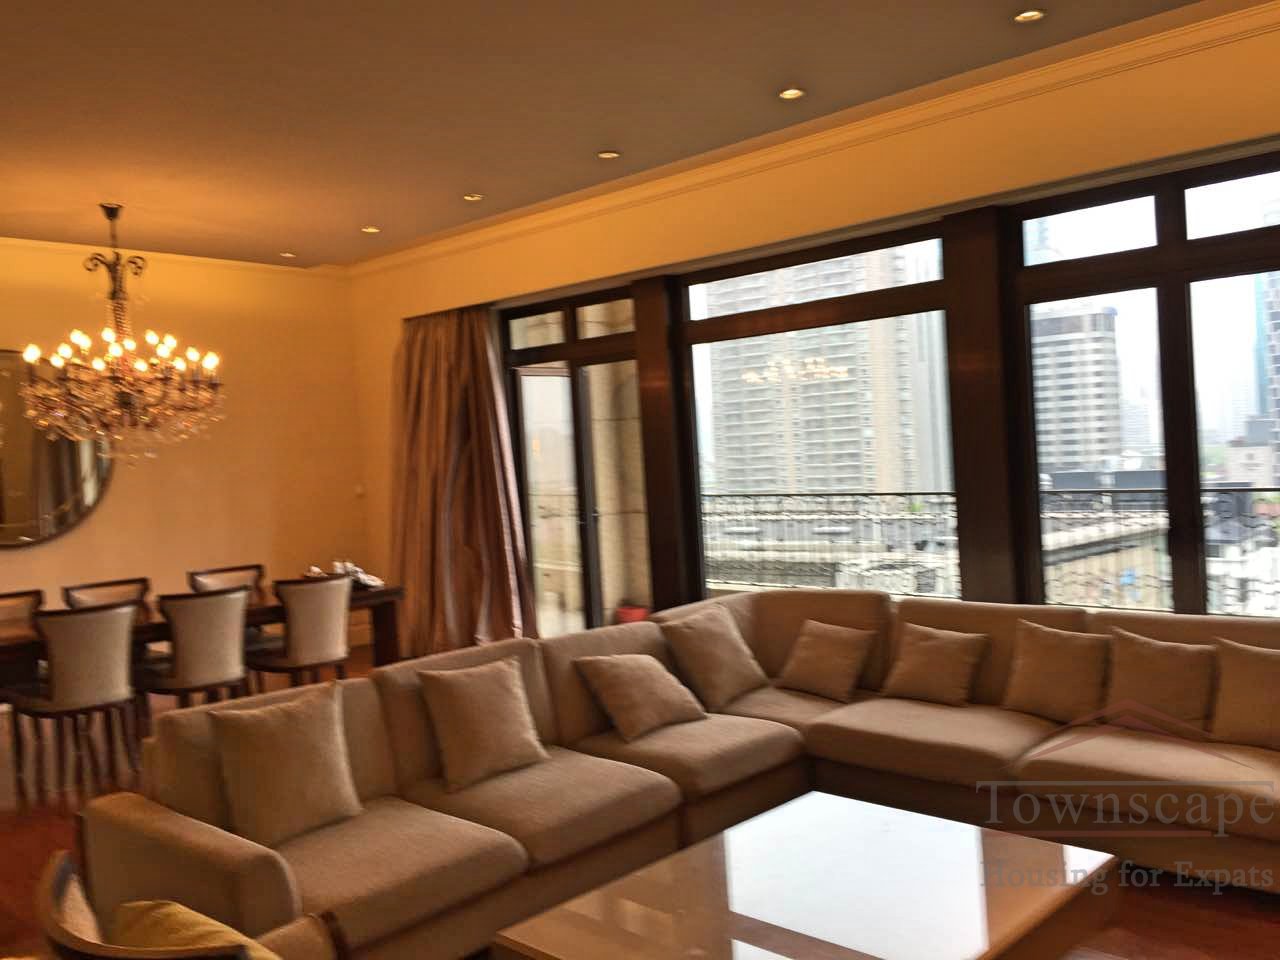 Shanghai luxury rentals Prestigious split-level triplex w/ 5BR in Lakeville Regency